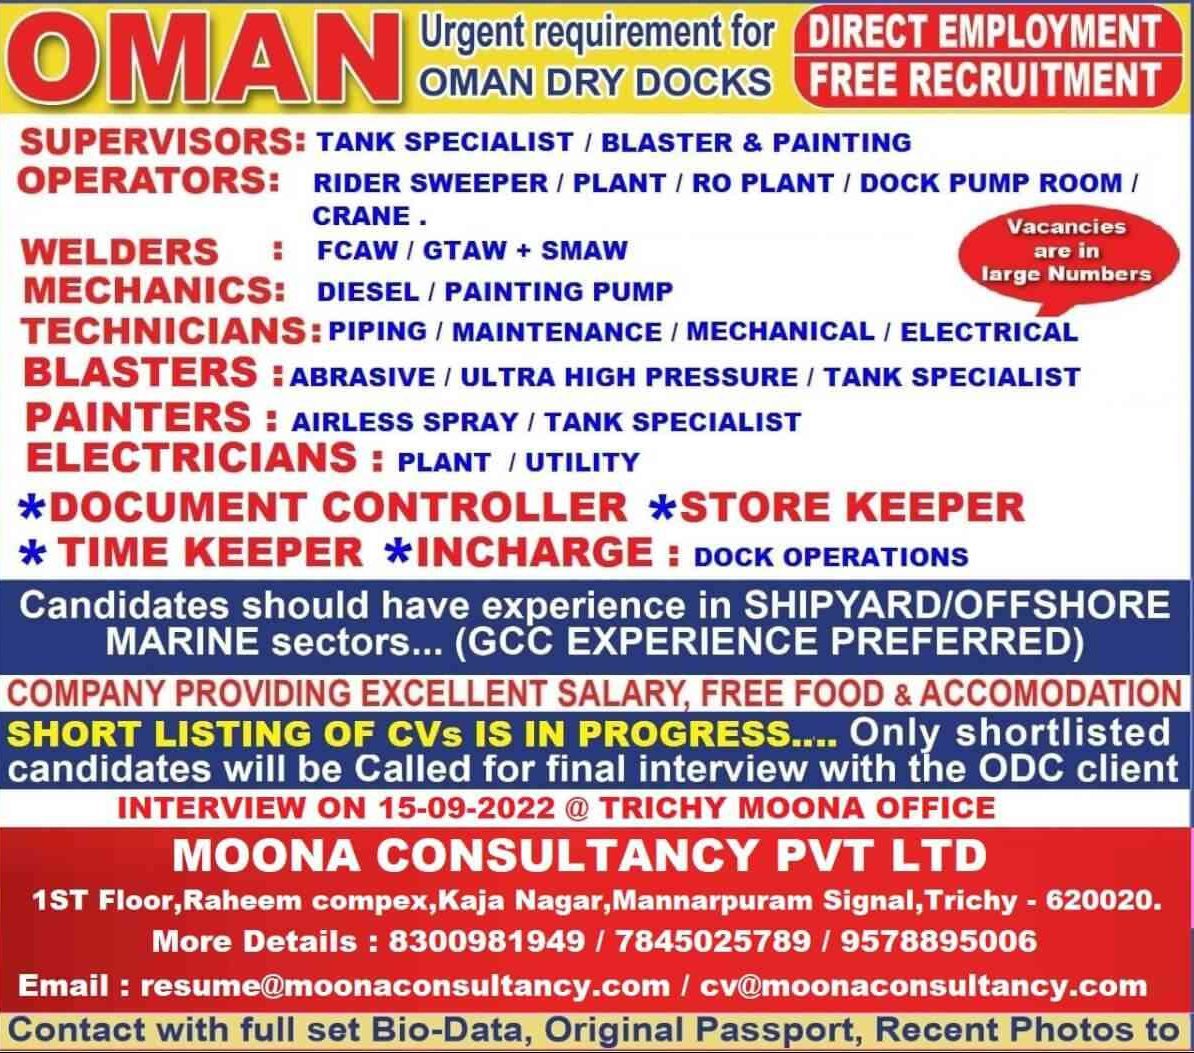 Free Recruitments Urgent hiring for Dry docks - Oman